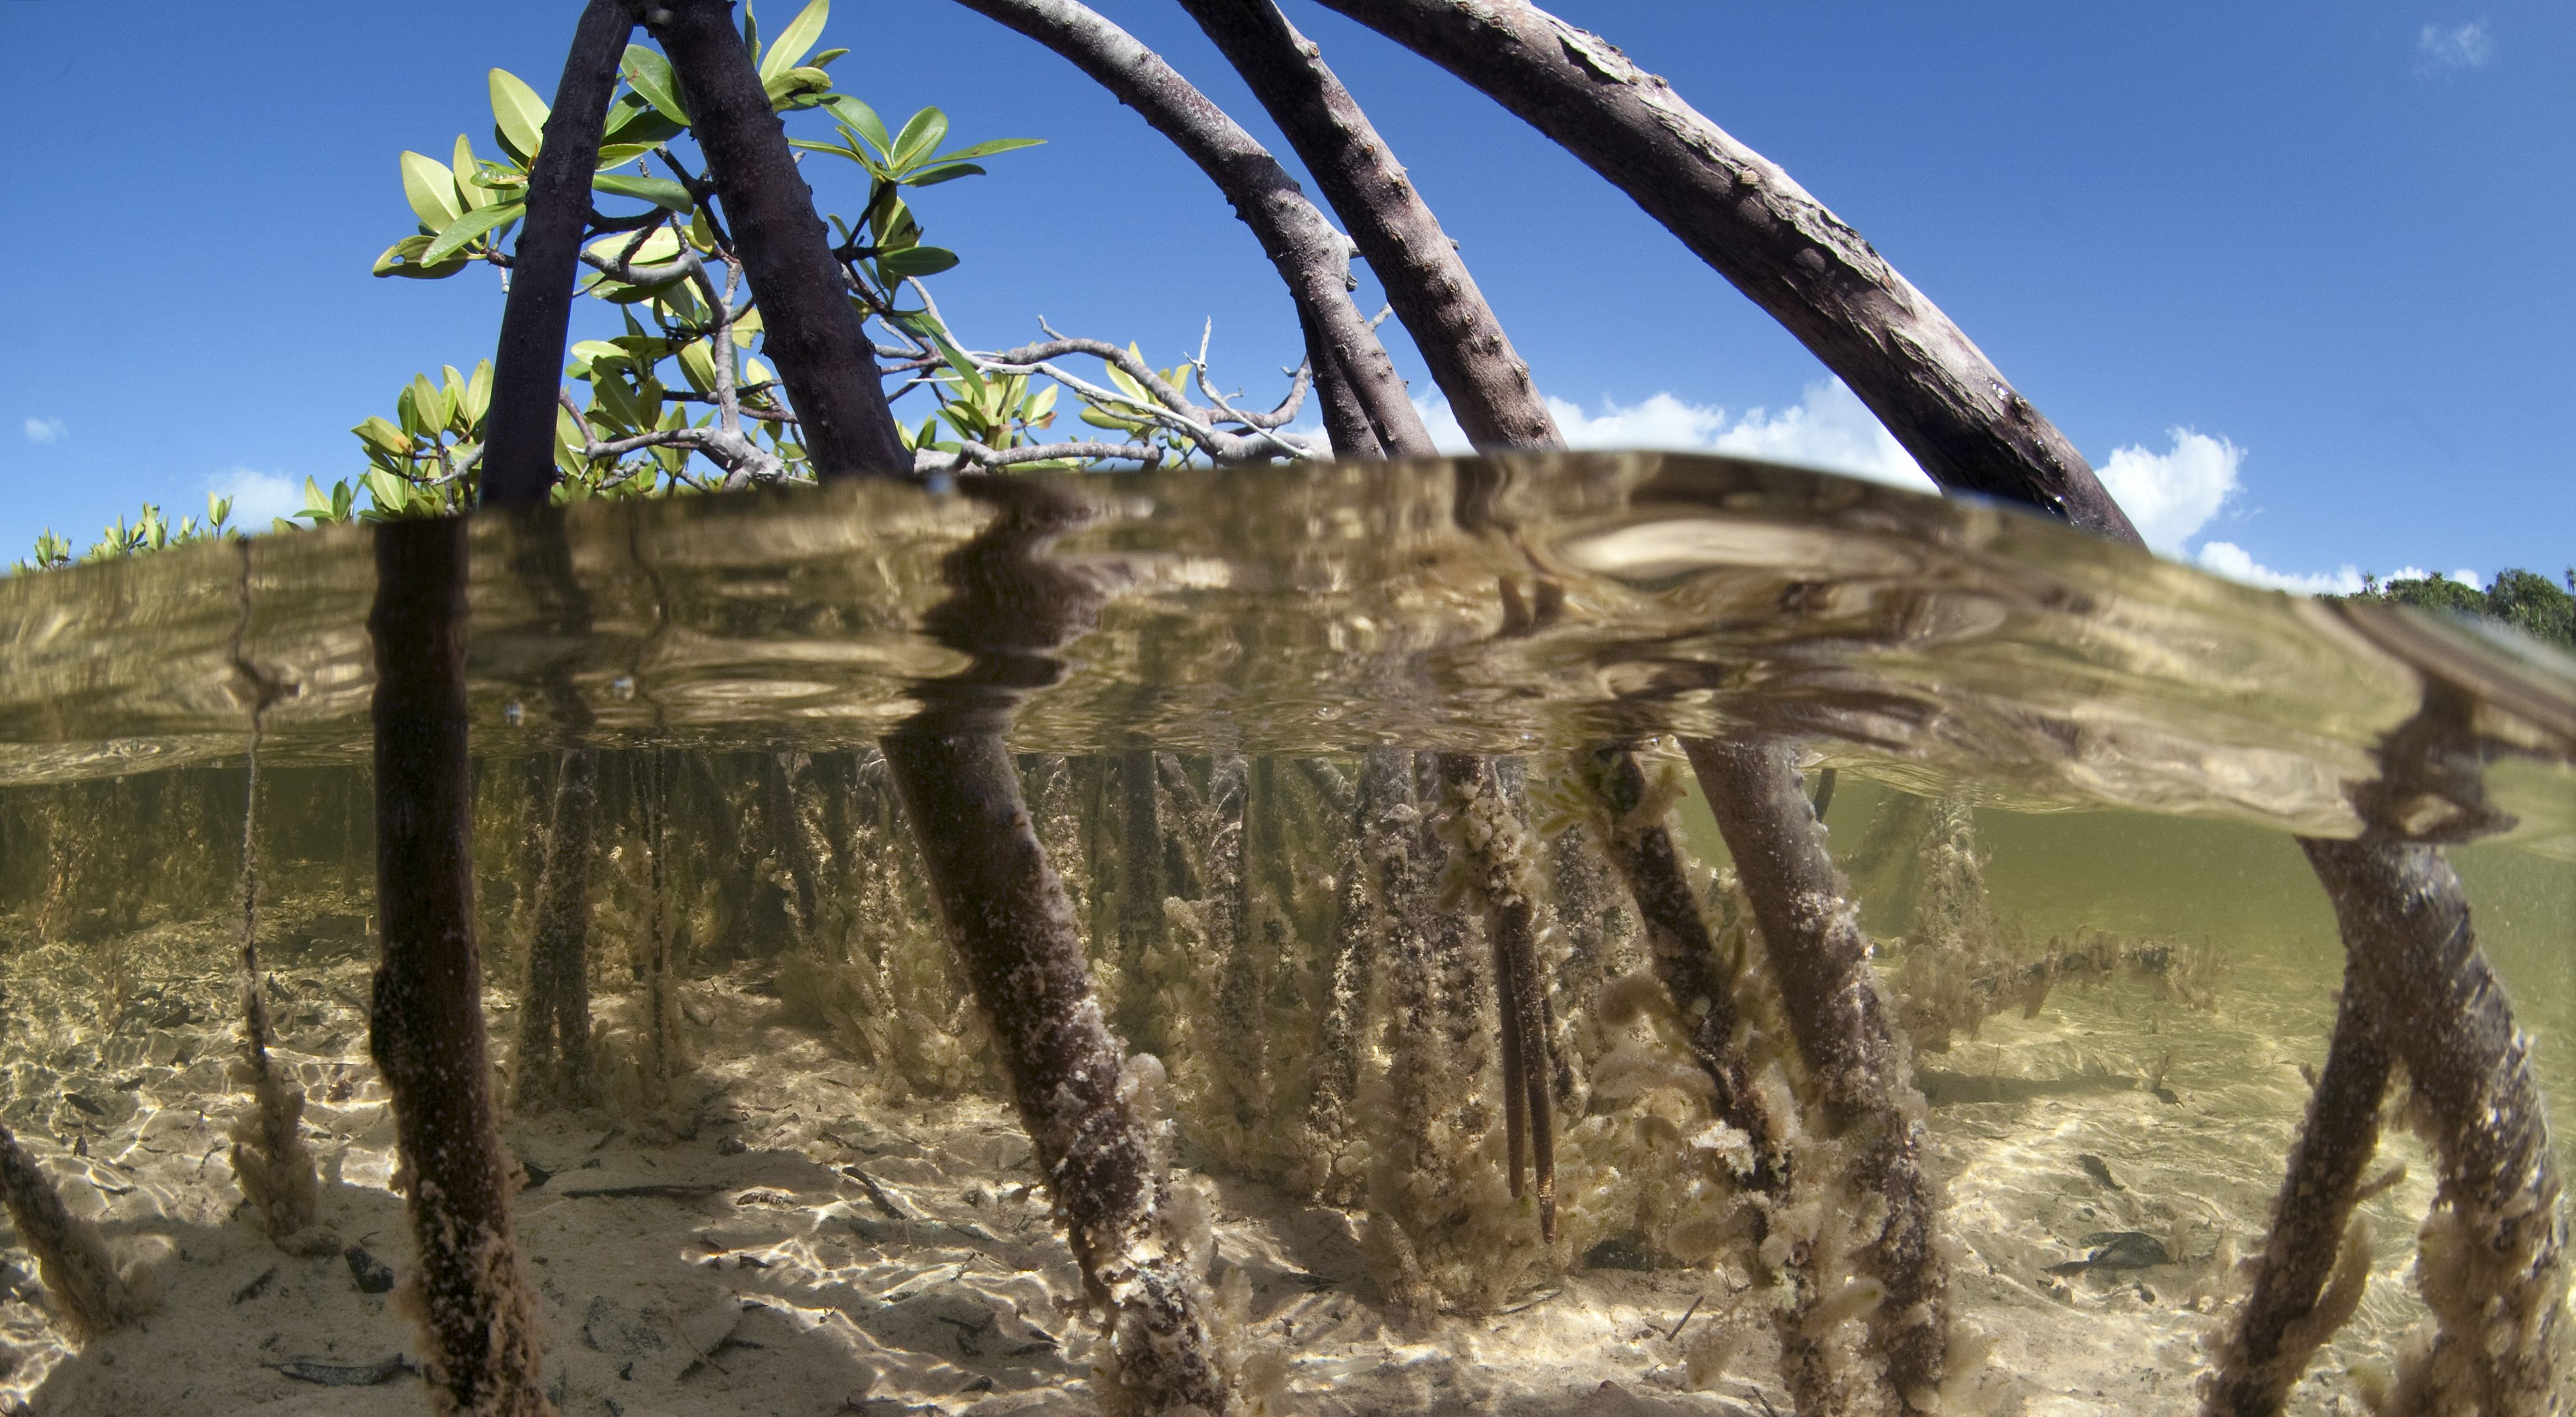 Underwater view of mangrove roots. 